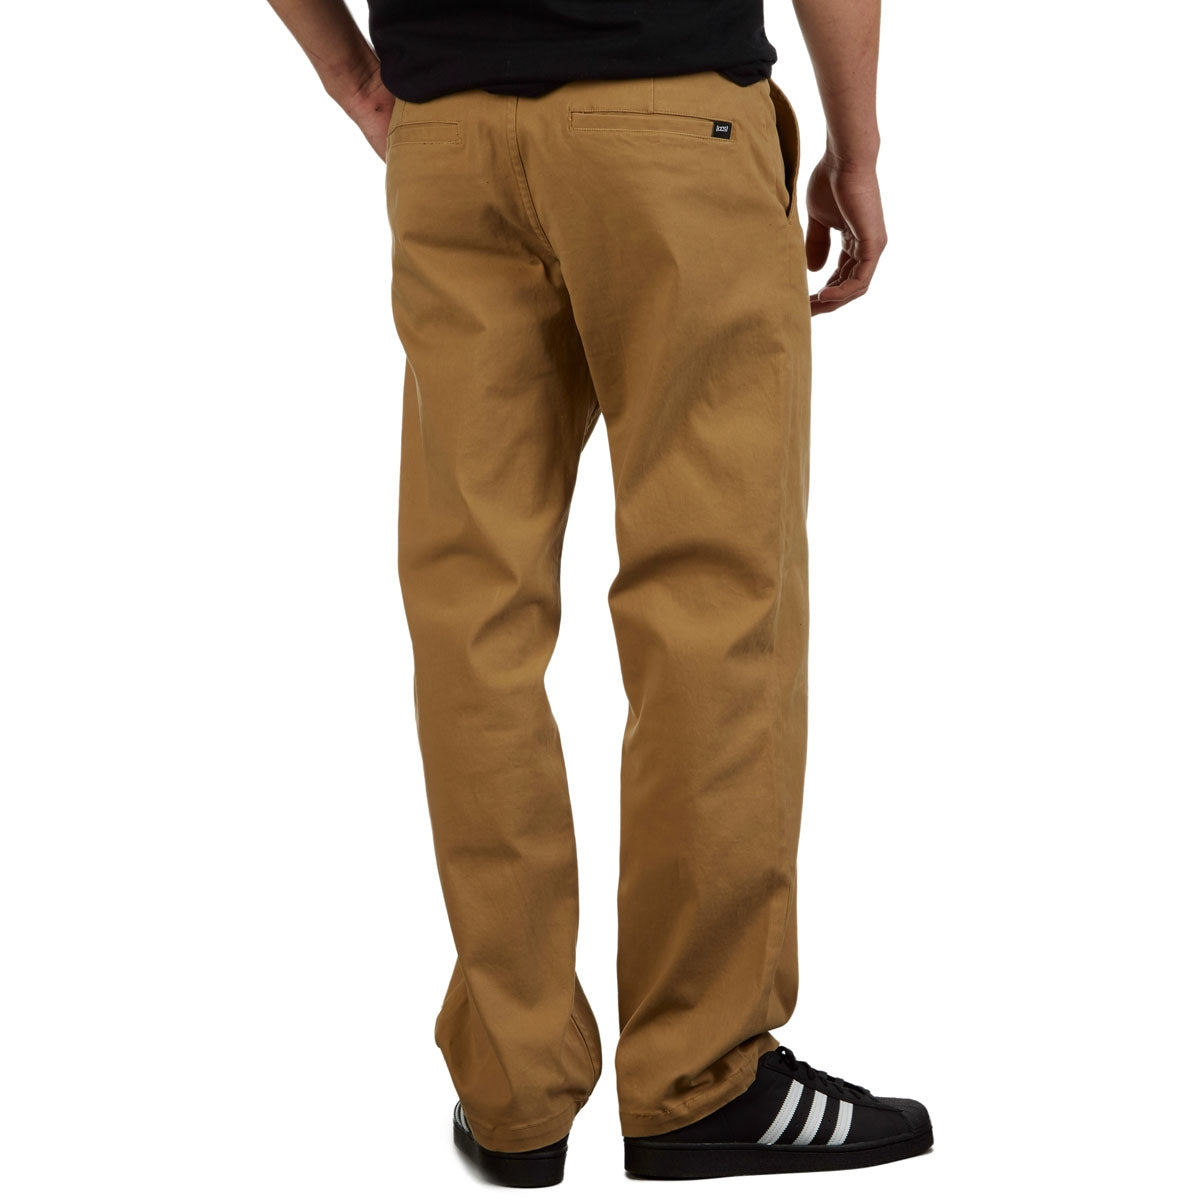 CCS Standard Plus Relaxed Chino Pants - Khaki image 3